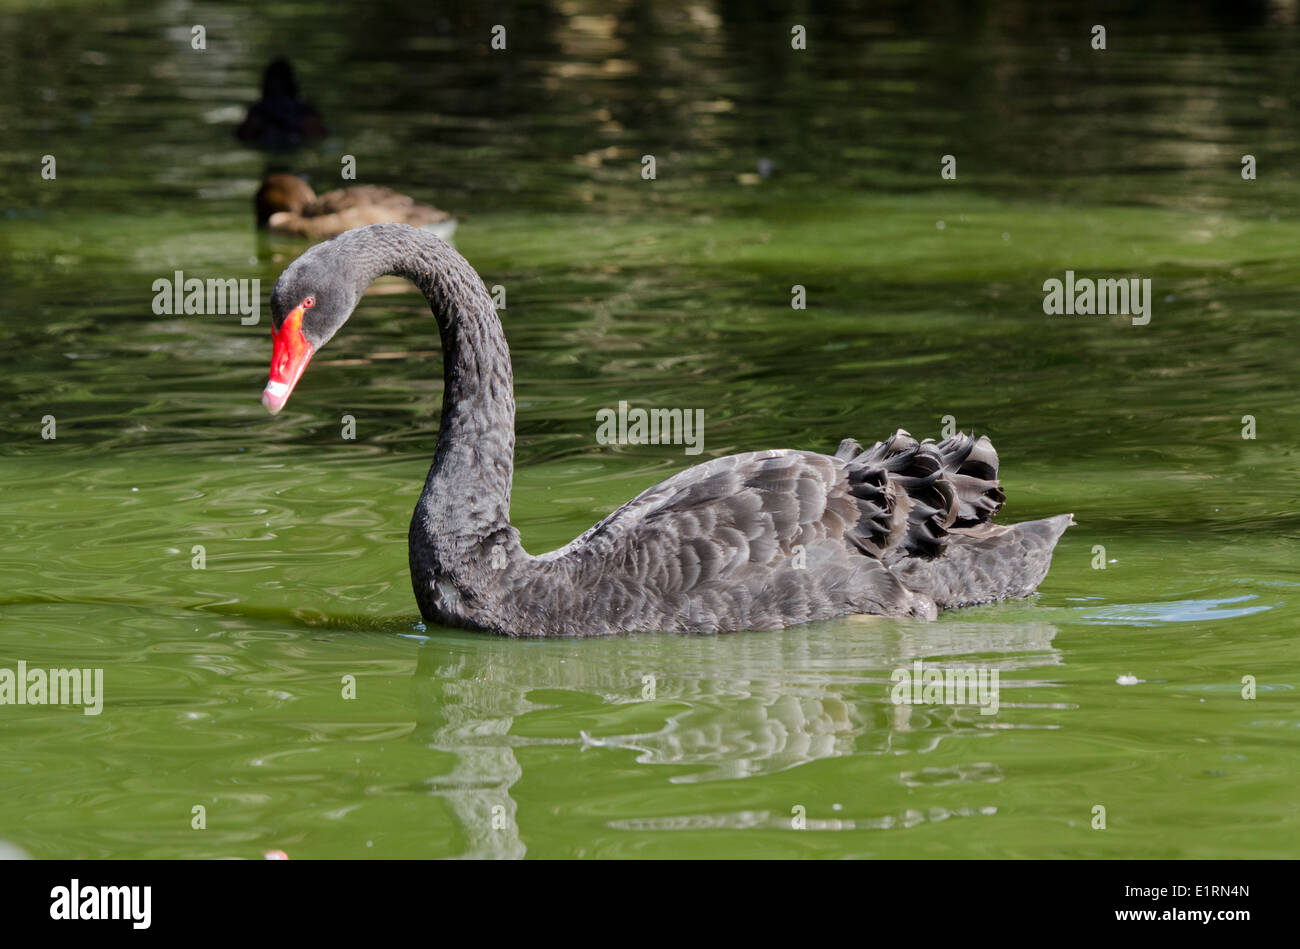 Australia, South Australia, Adelaide. Cleland Wildlife Park. Black swan (Cygnus atratus). Stock Photo